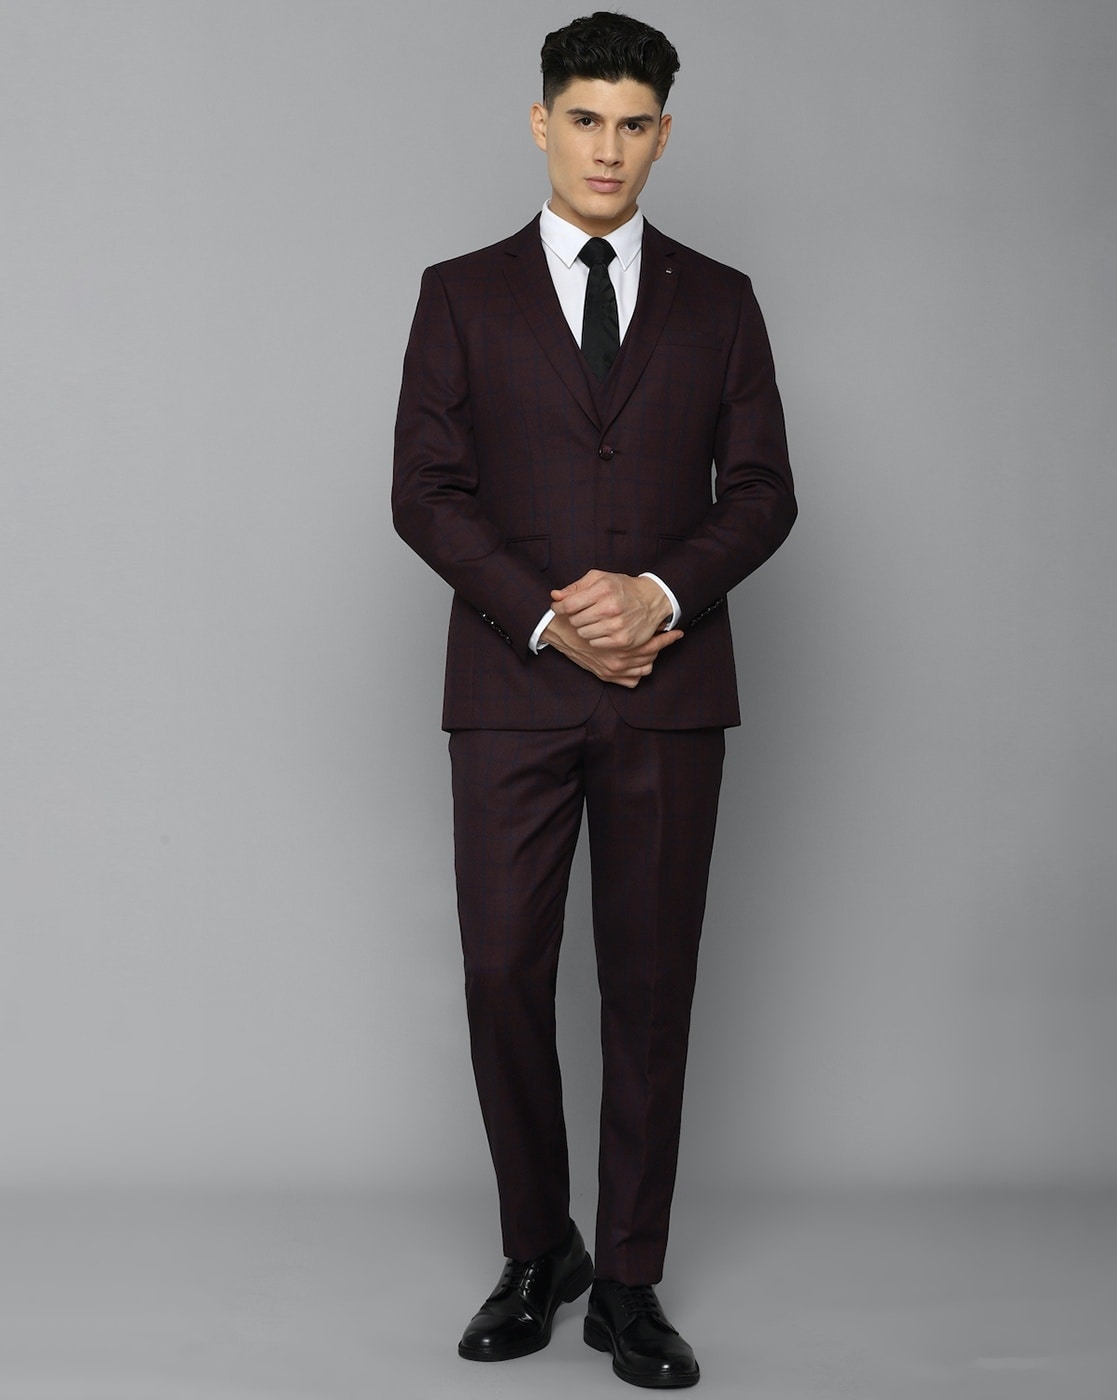 Burgundy Suit Jacket - Groom Inspiration | Burgundy suit, Black and burgundy  suit, Wedding los angeles